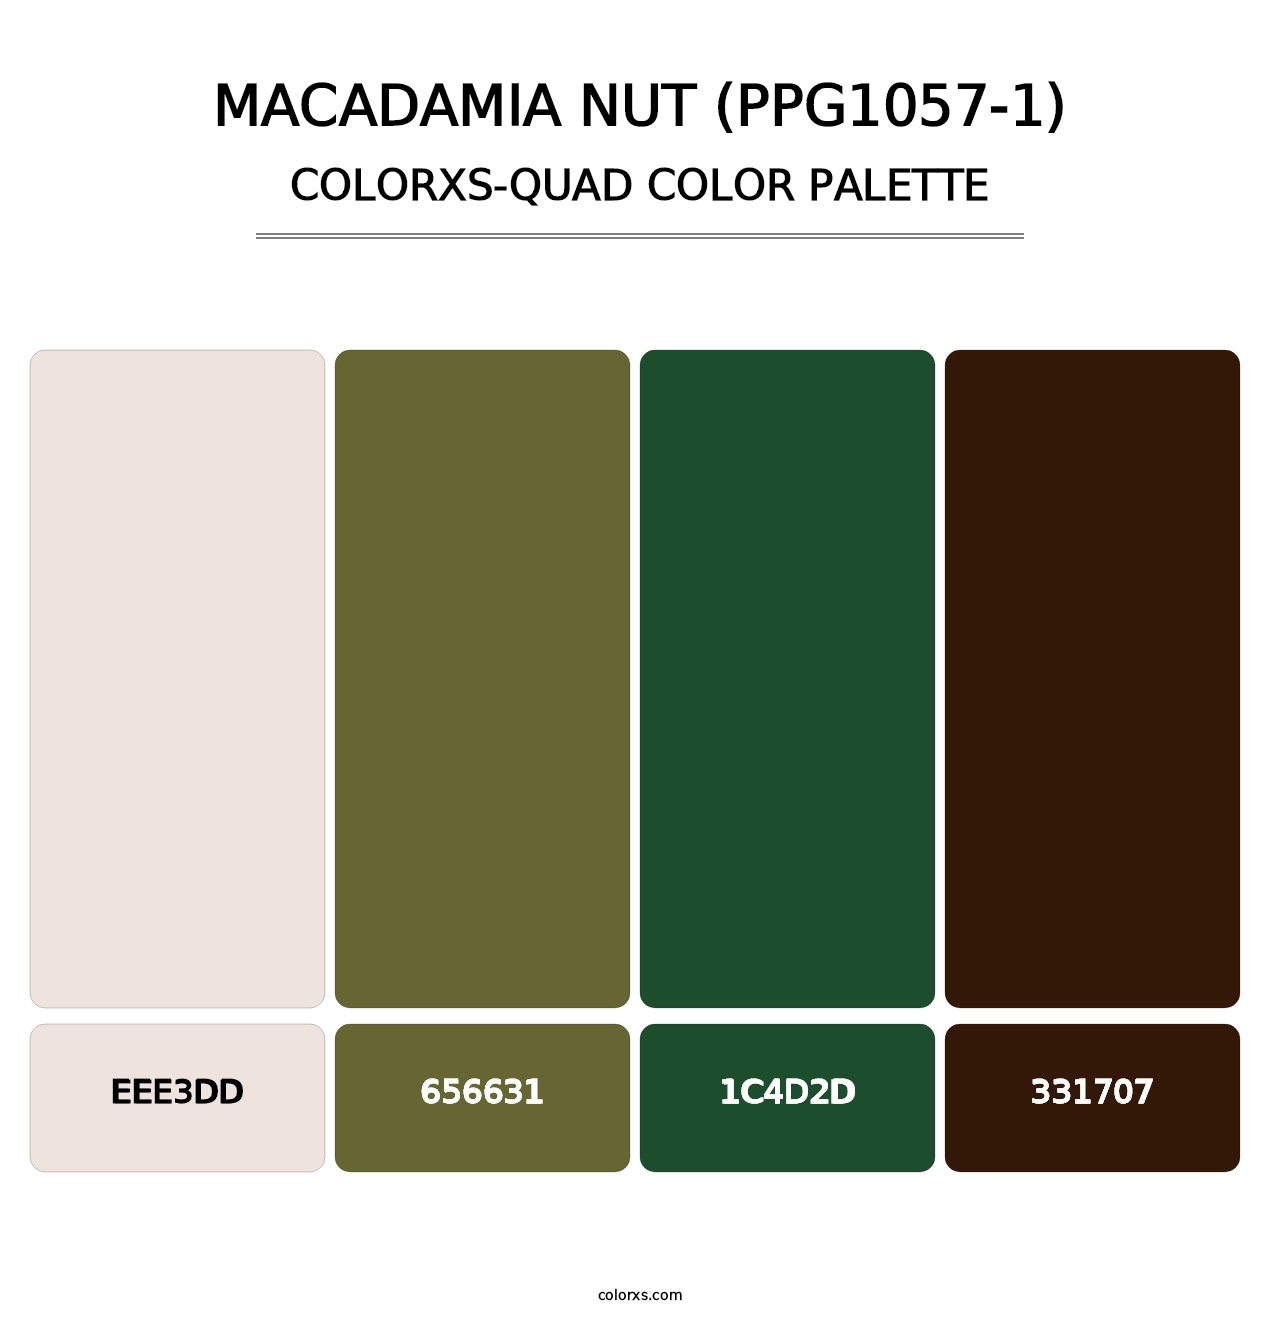 Macadamia Nut (PPG1057-1) - Colorxs Quad Palette